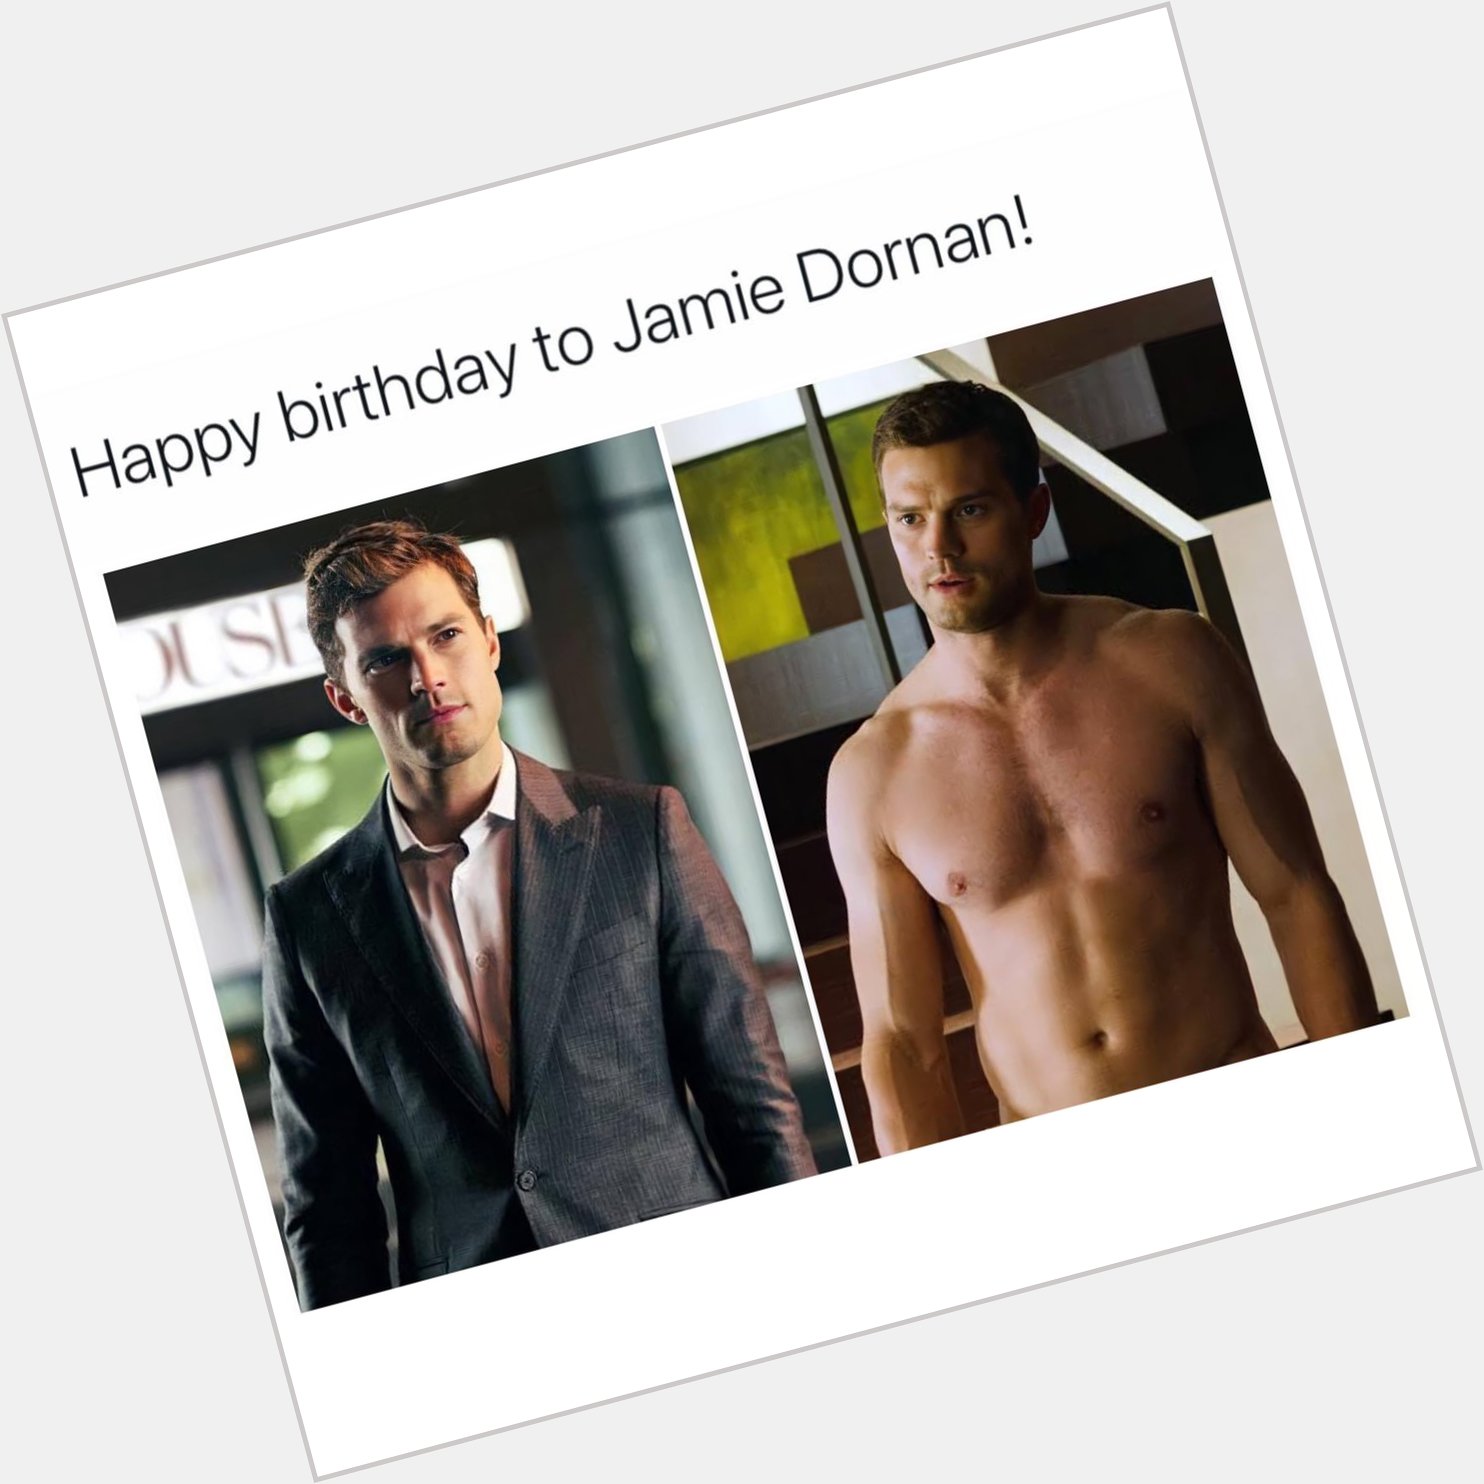 Happy birthday Jamie Dornan! 